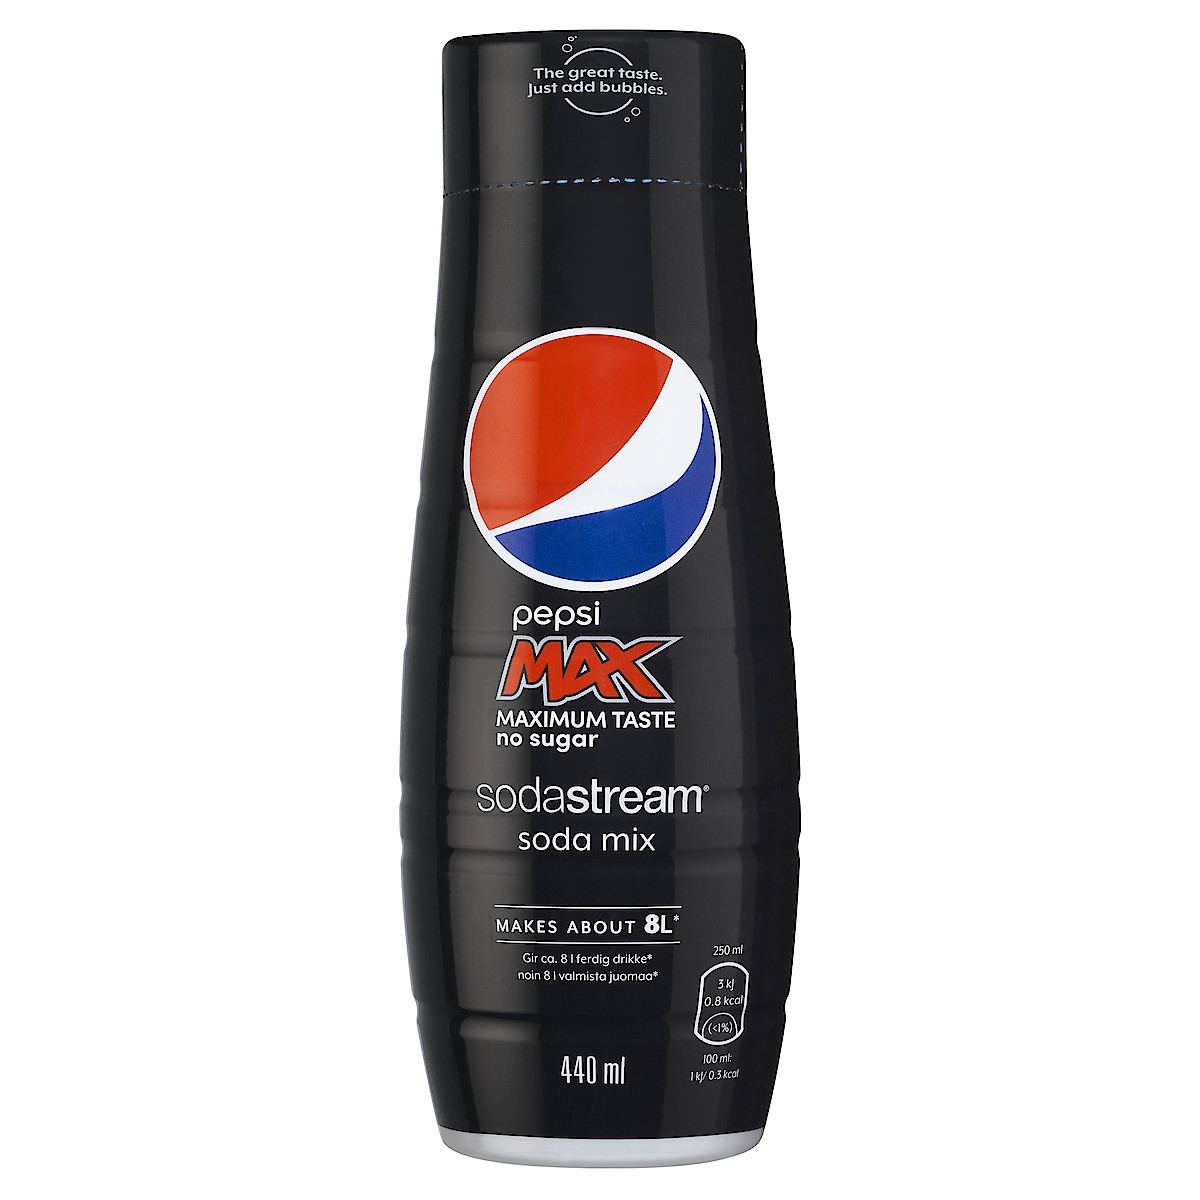 SodaStream Pepsi Max, smakkoncentrat 440 ml